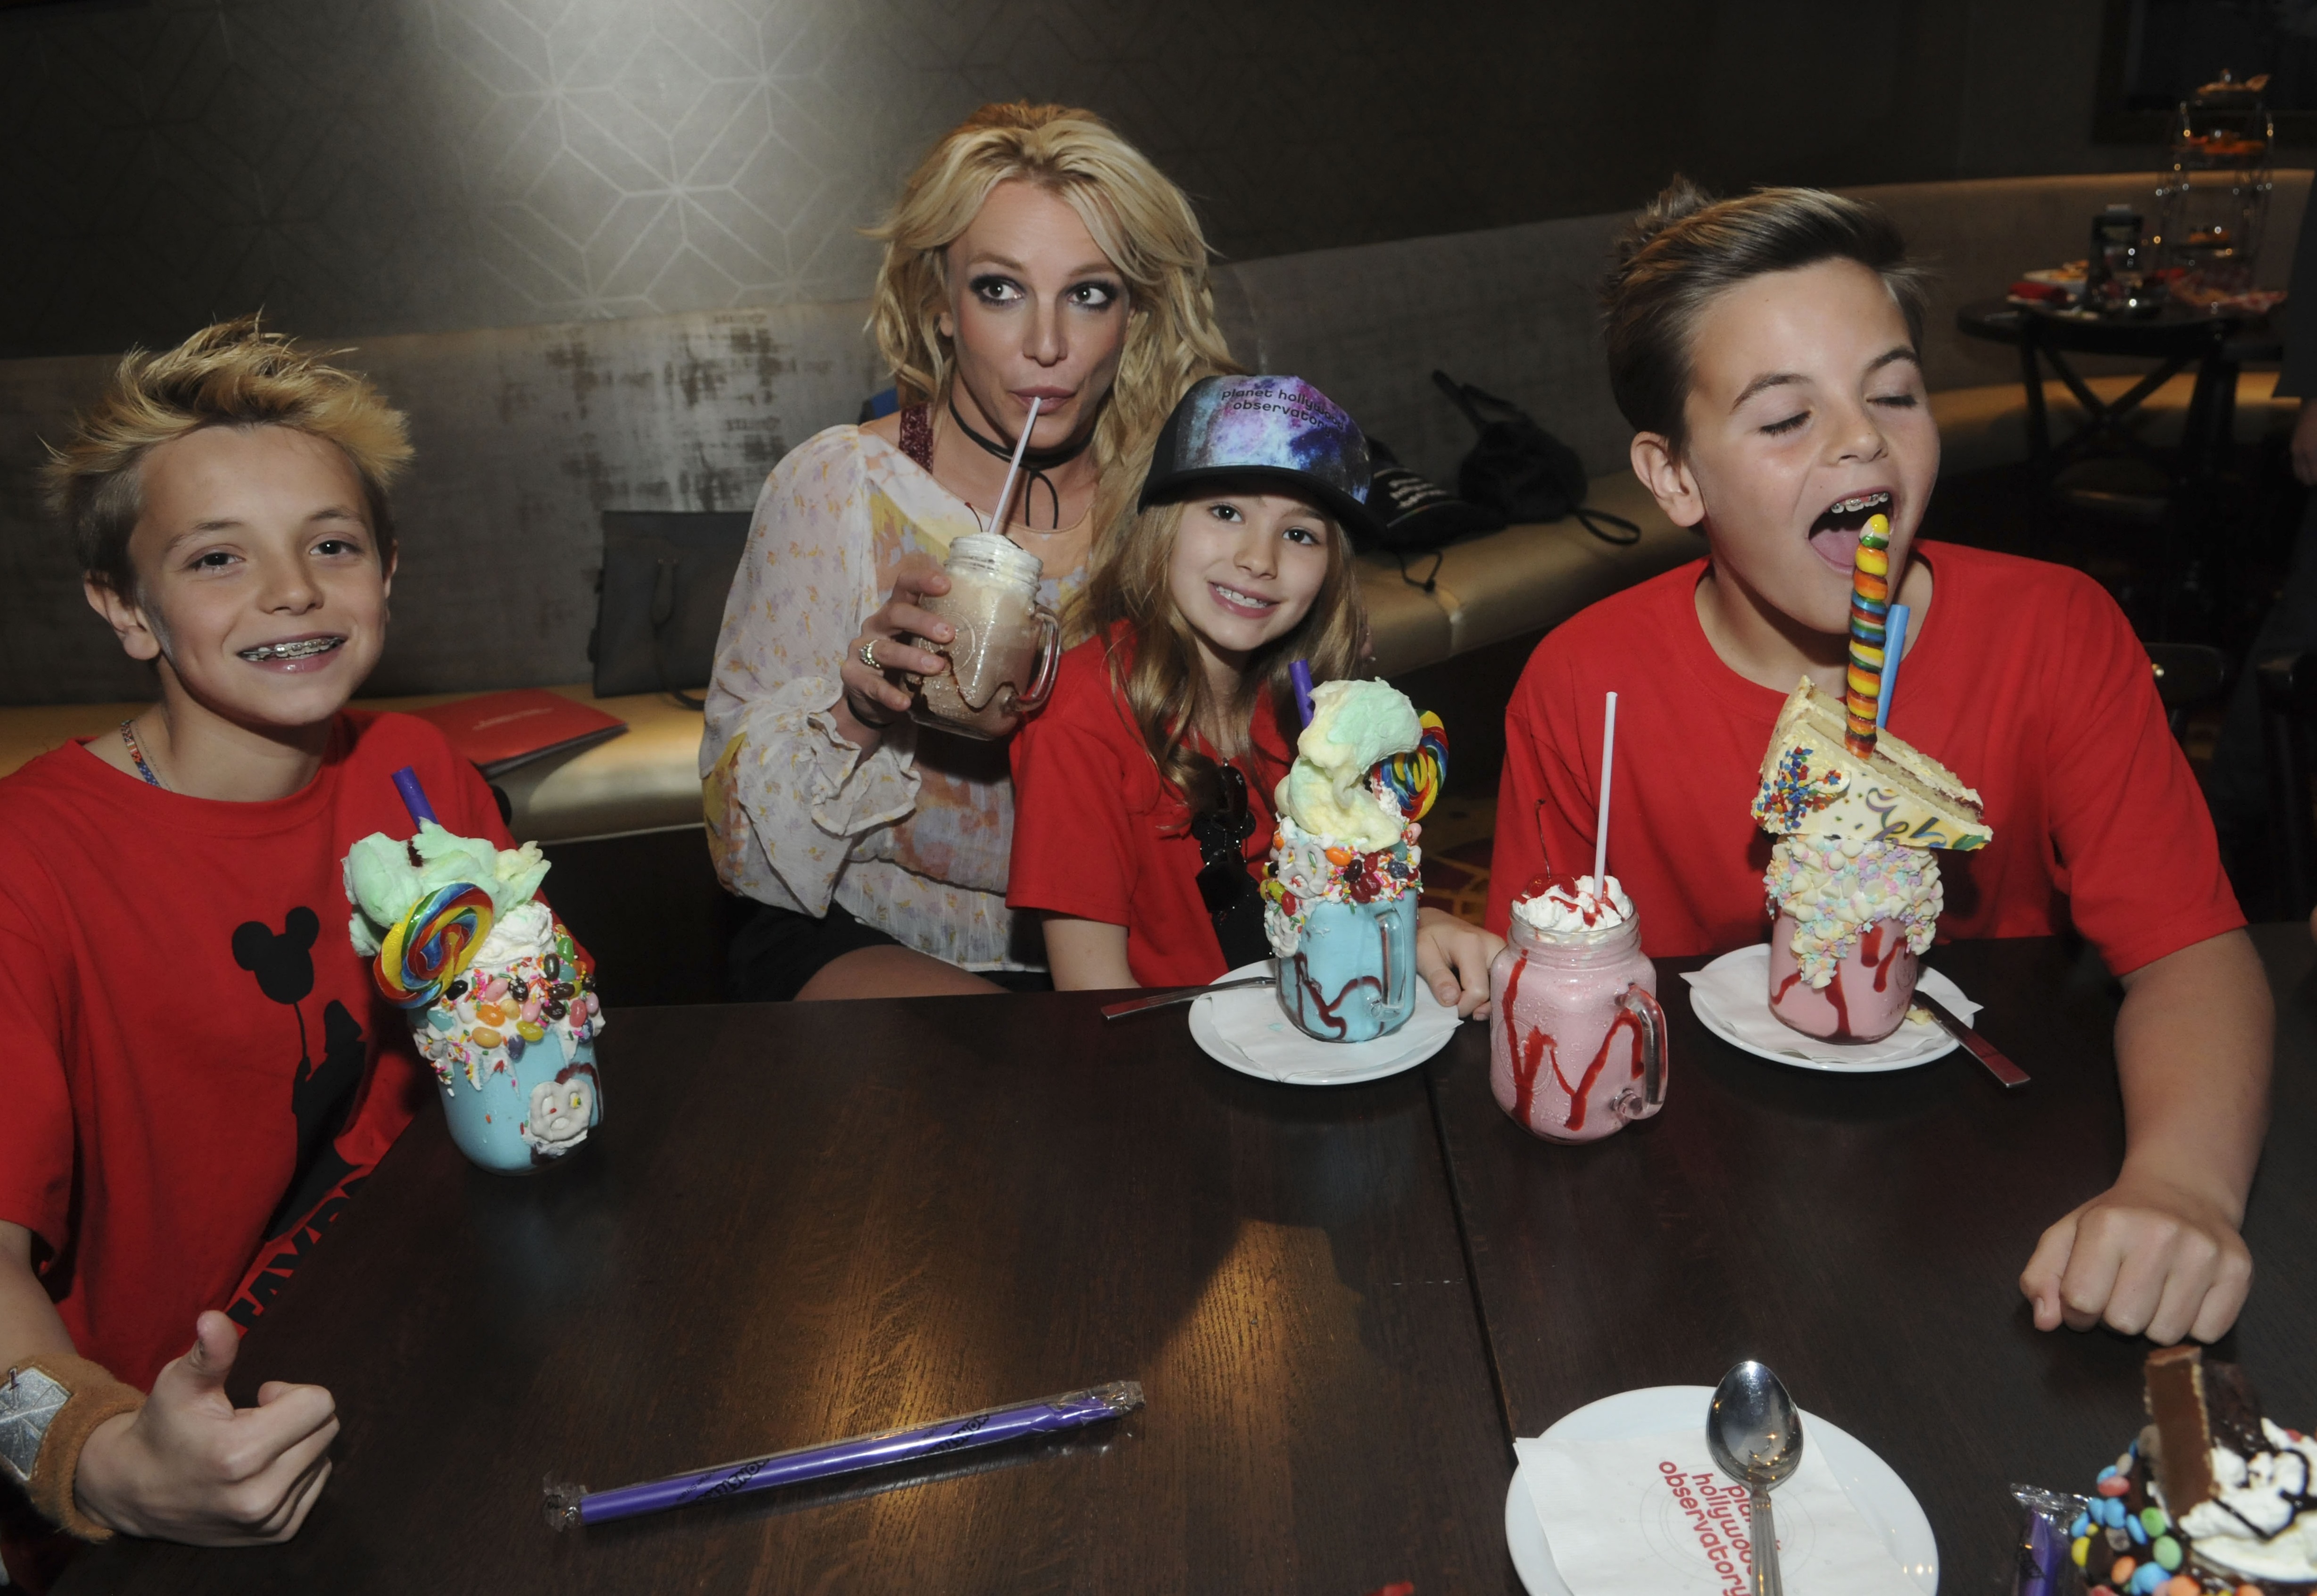 Britney Spears with her two sons Jayden Federline Sean Federline and niece Maddie Aldridge enjoying ice cream shakes together